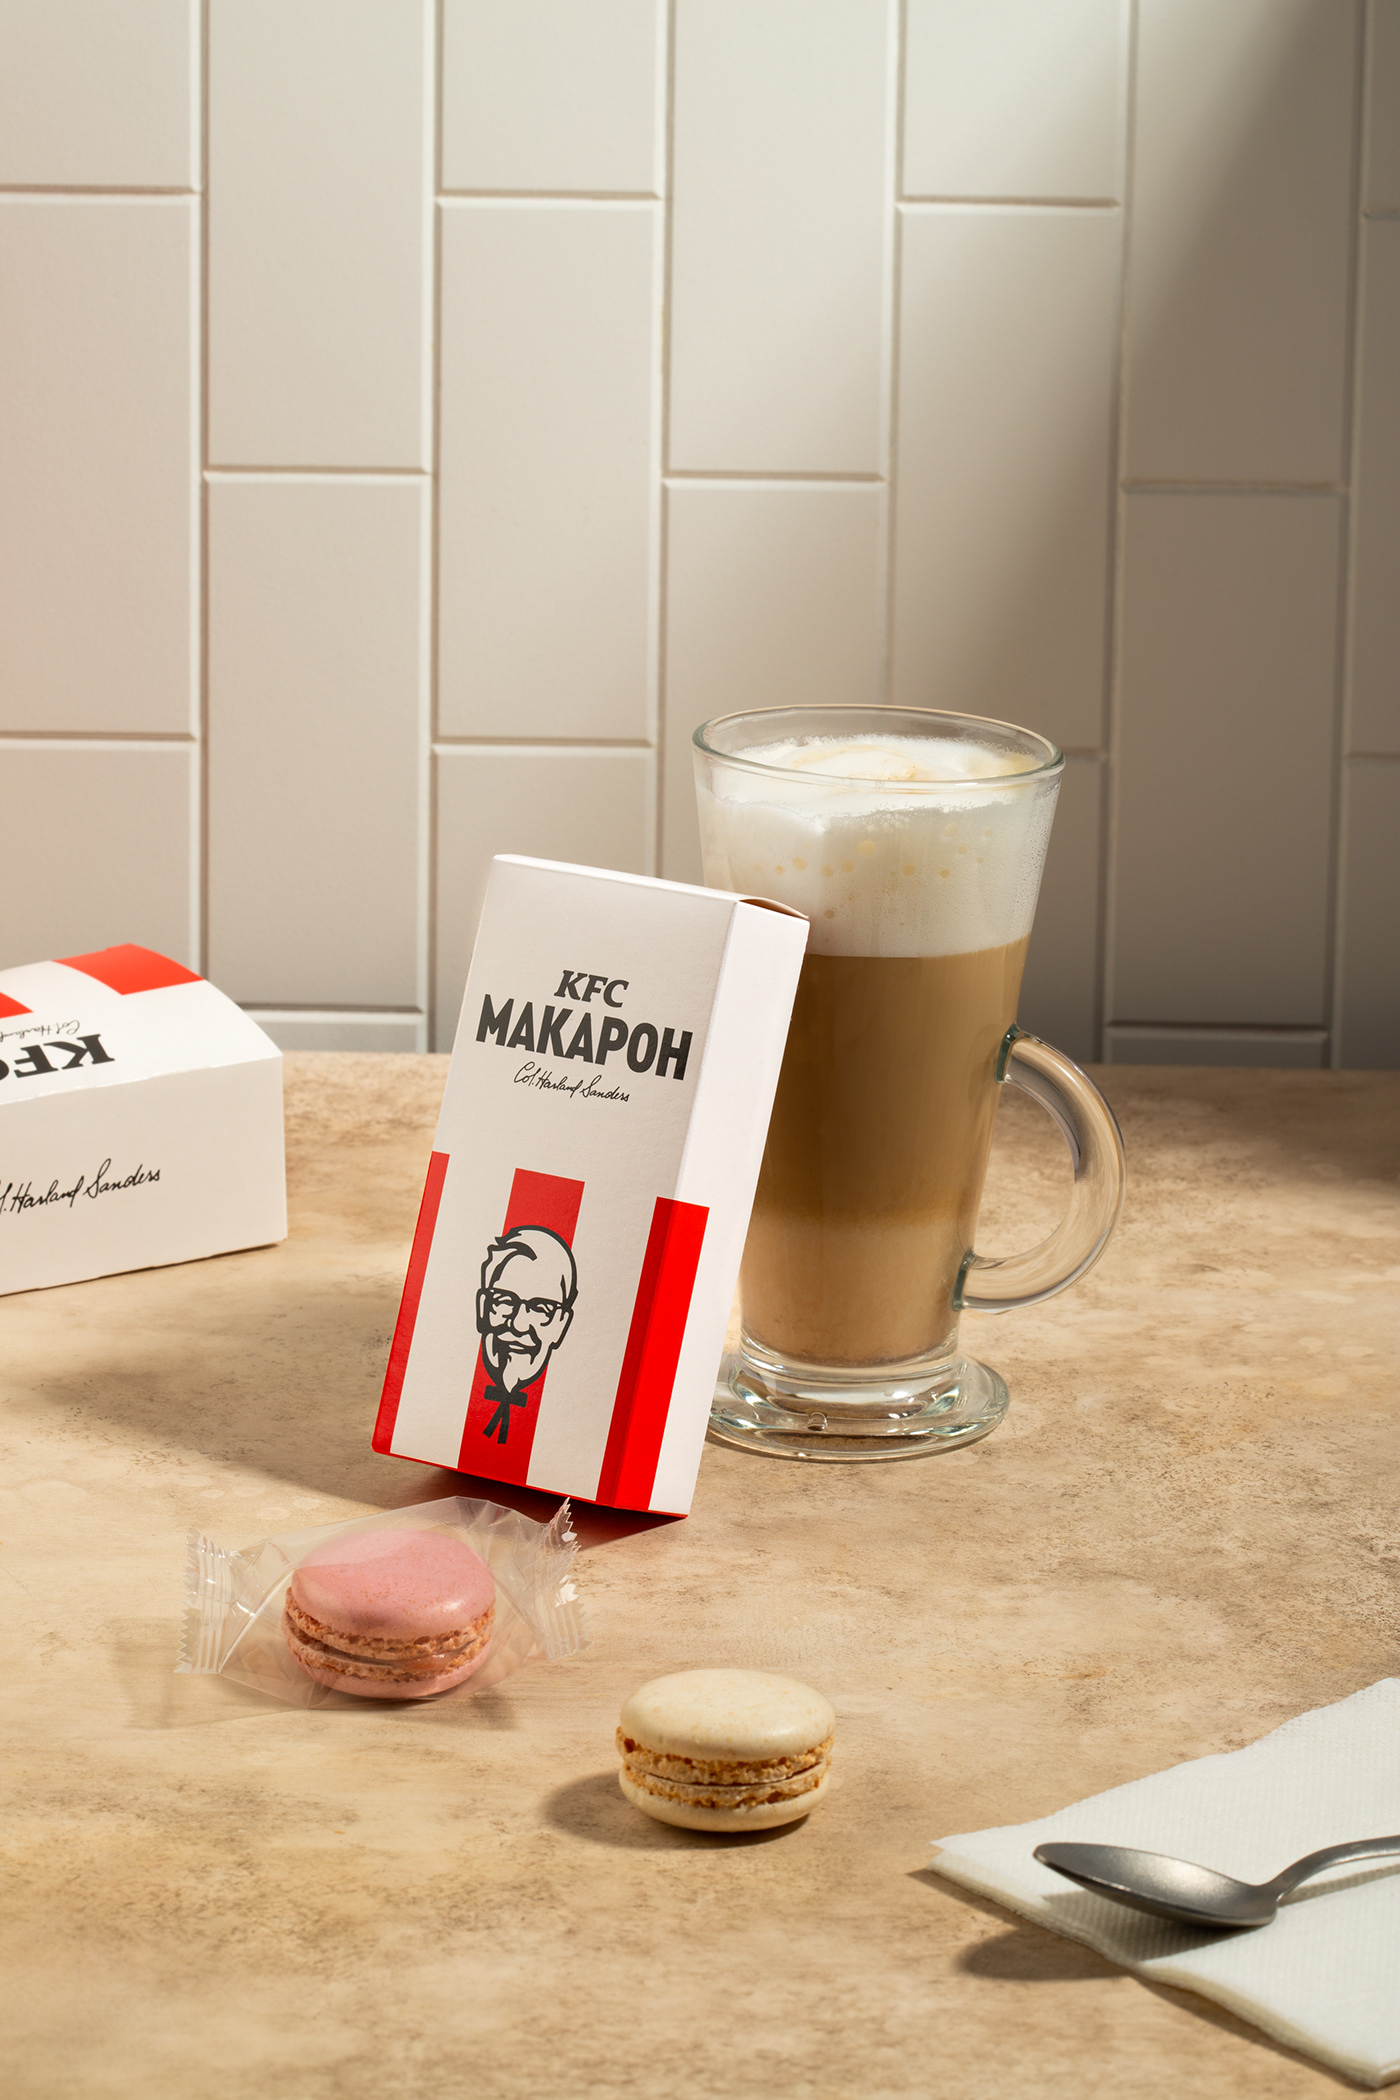 Advertising  bakery Brand Design KFC macarons marketing   Packaging Social media post Socialmedia кфс